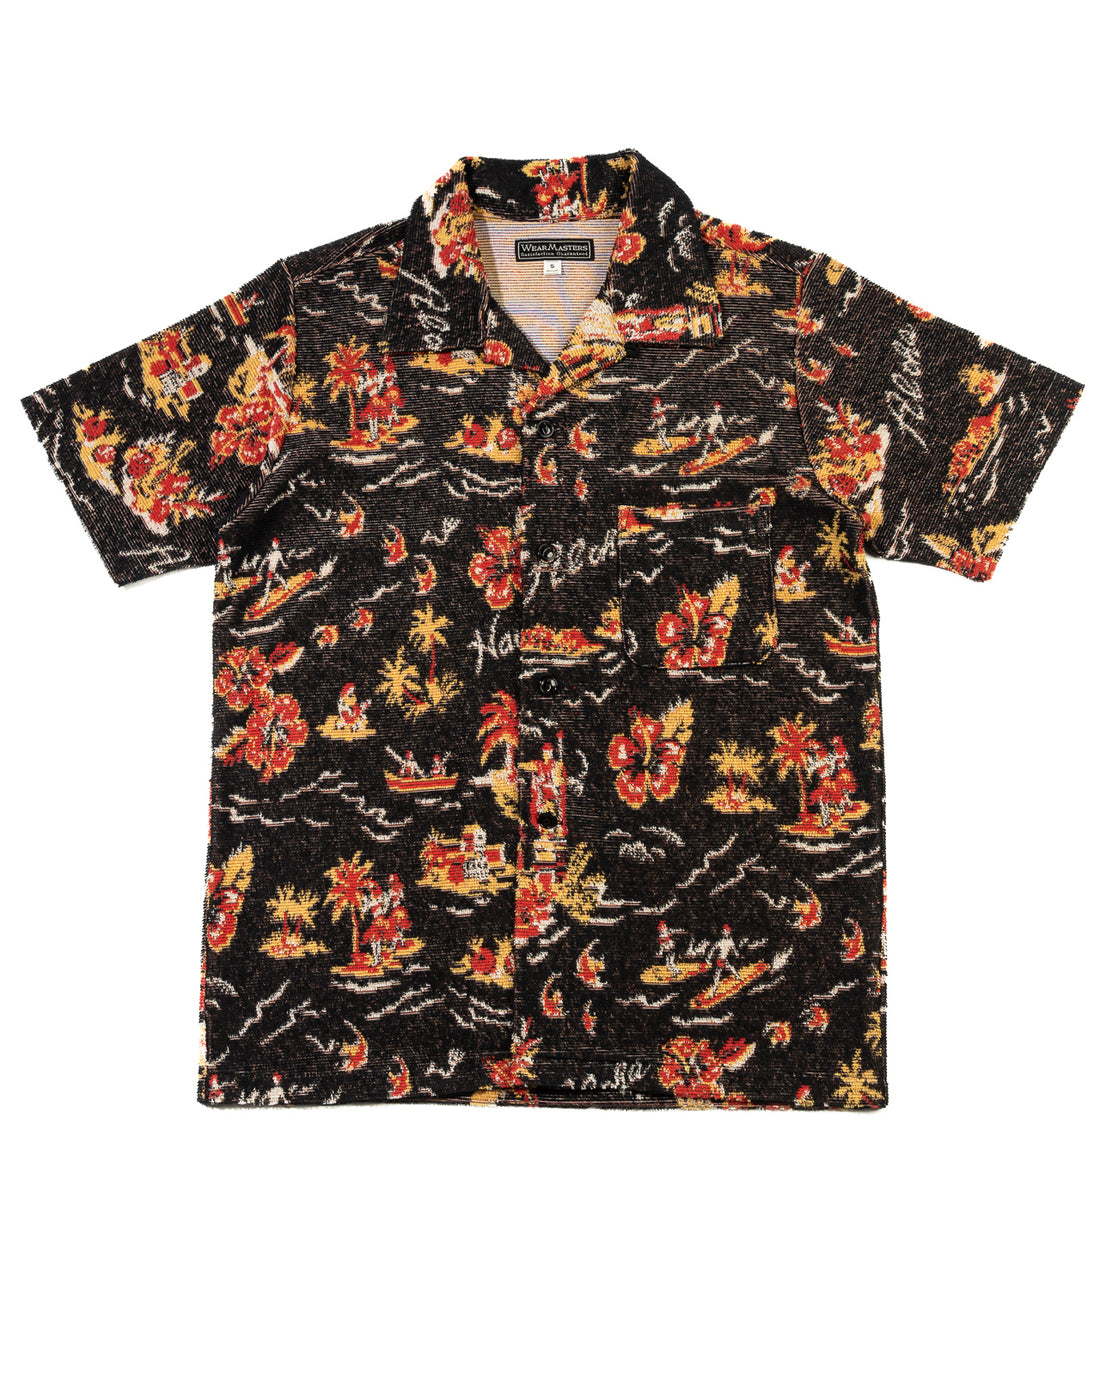 Attractions Hawaii Pile Shirt - Black - Standard & Strange